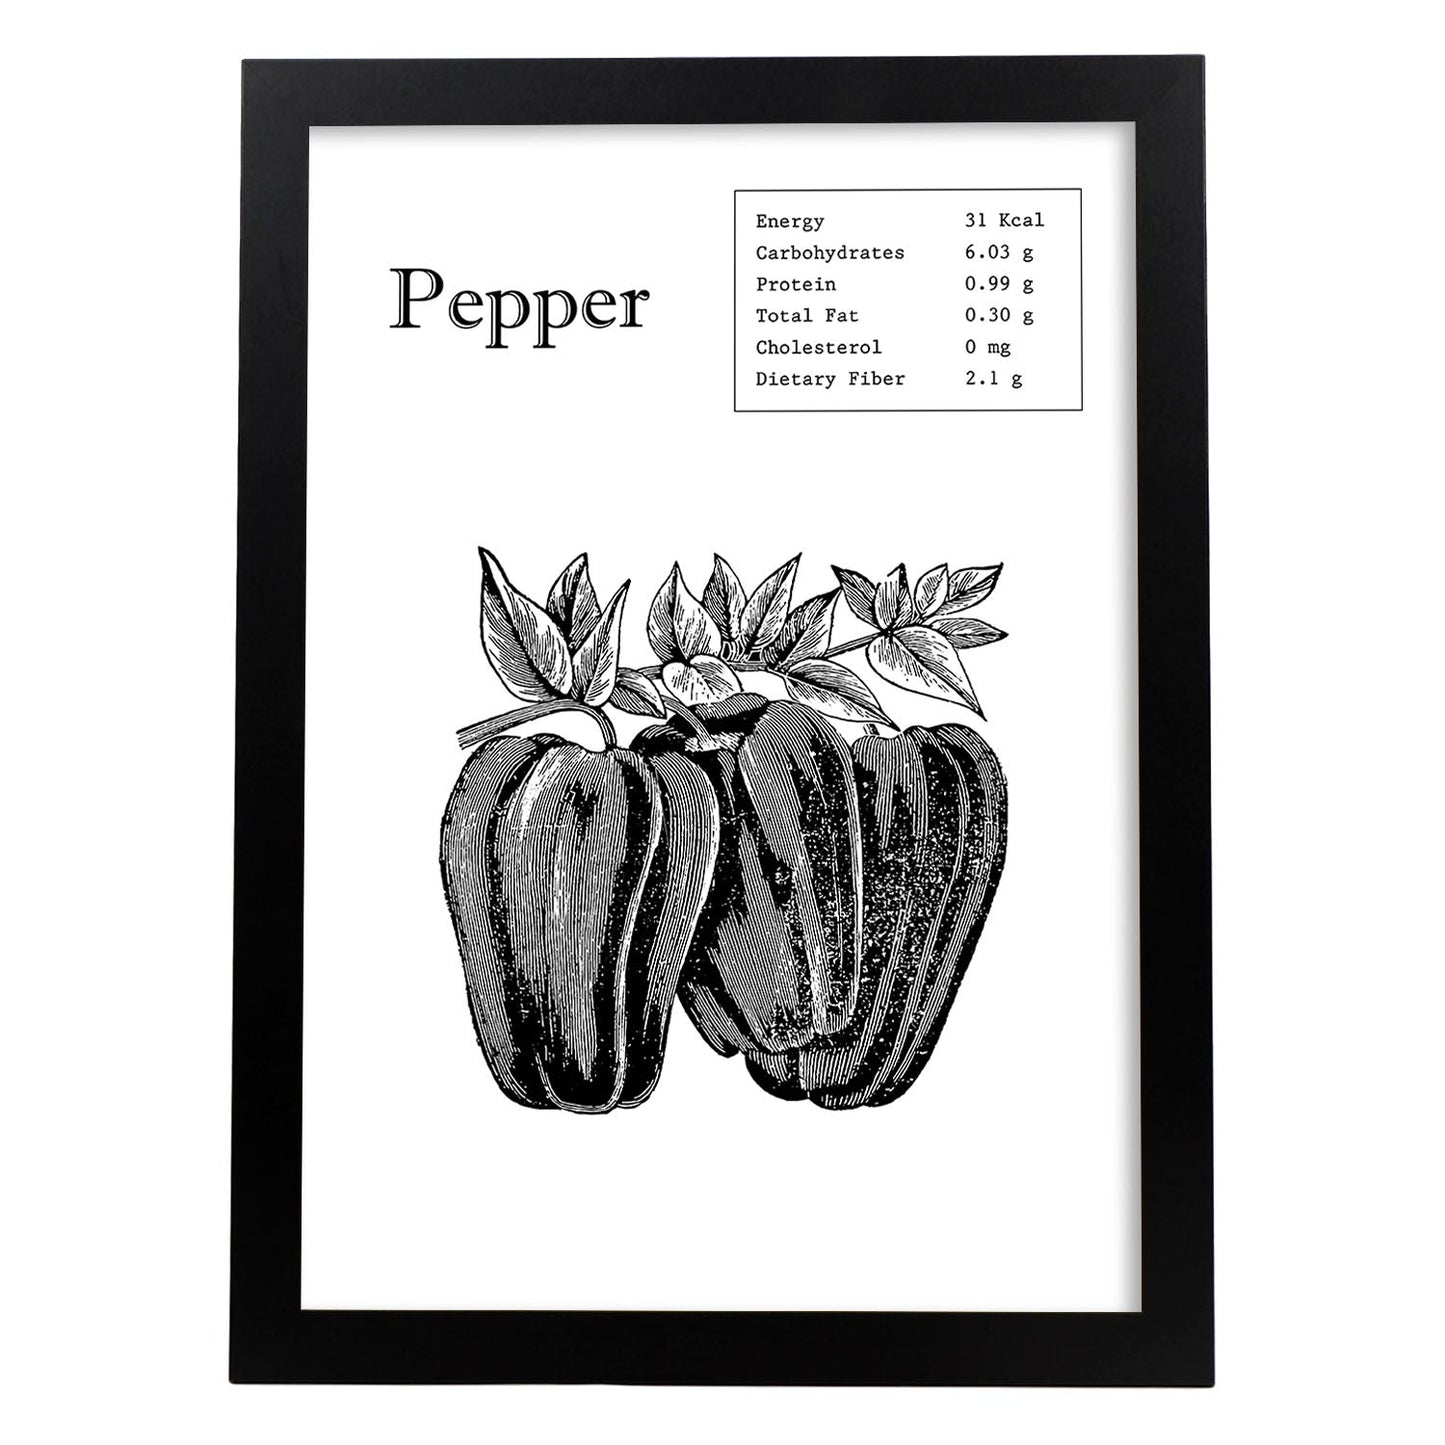 Poster de Pepper. Láminas de frutas y verduras en inglés.-Artwork-Nacnic-A3-Marco Negro-Nacnic Estudio SL